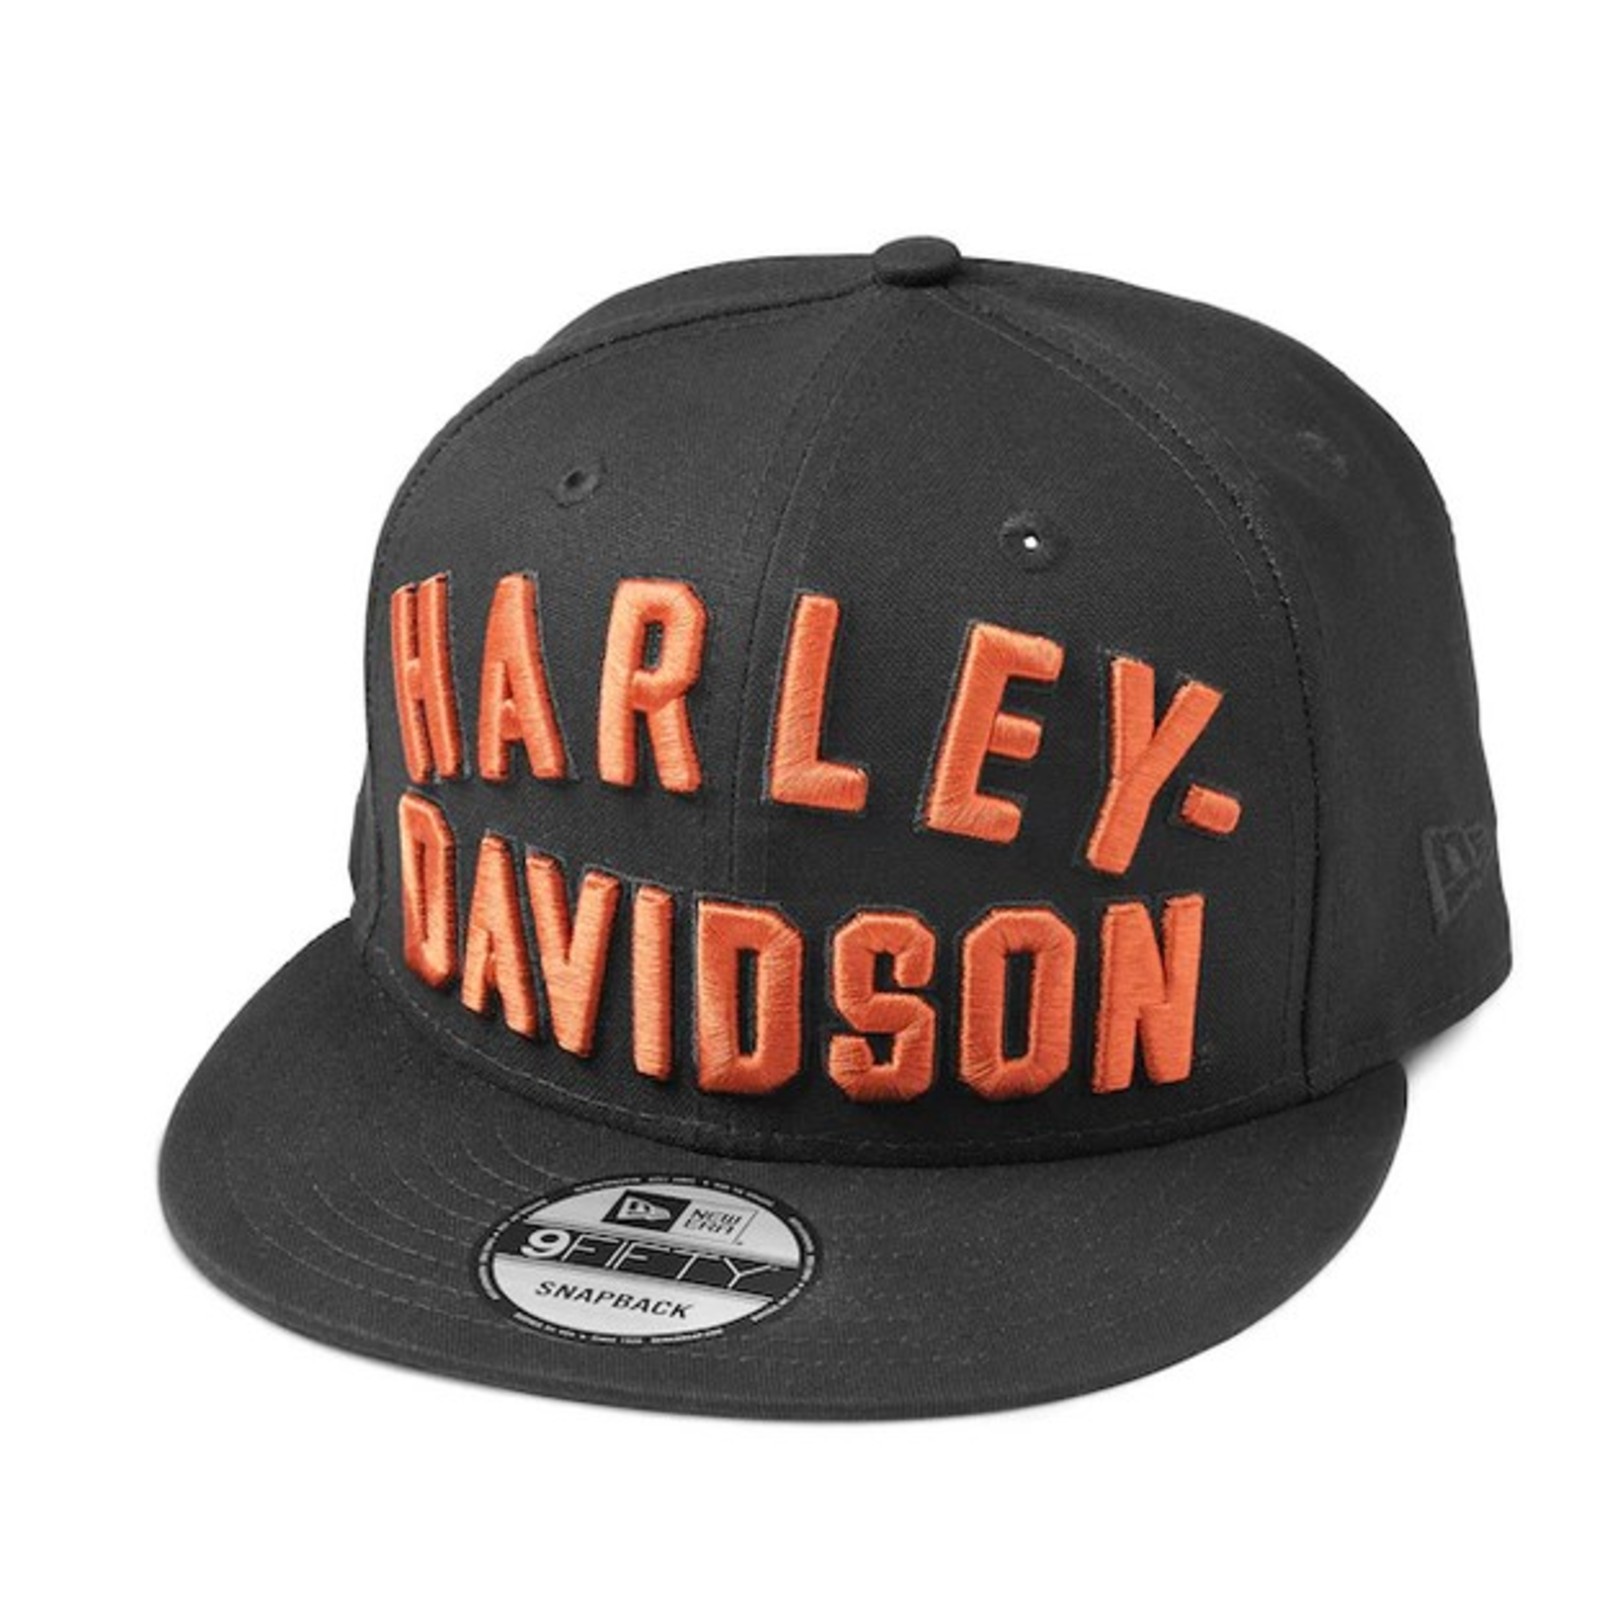 Harley-Davidson Men's Genuine 9FIFTY Cap, Black